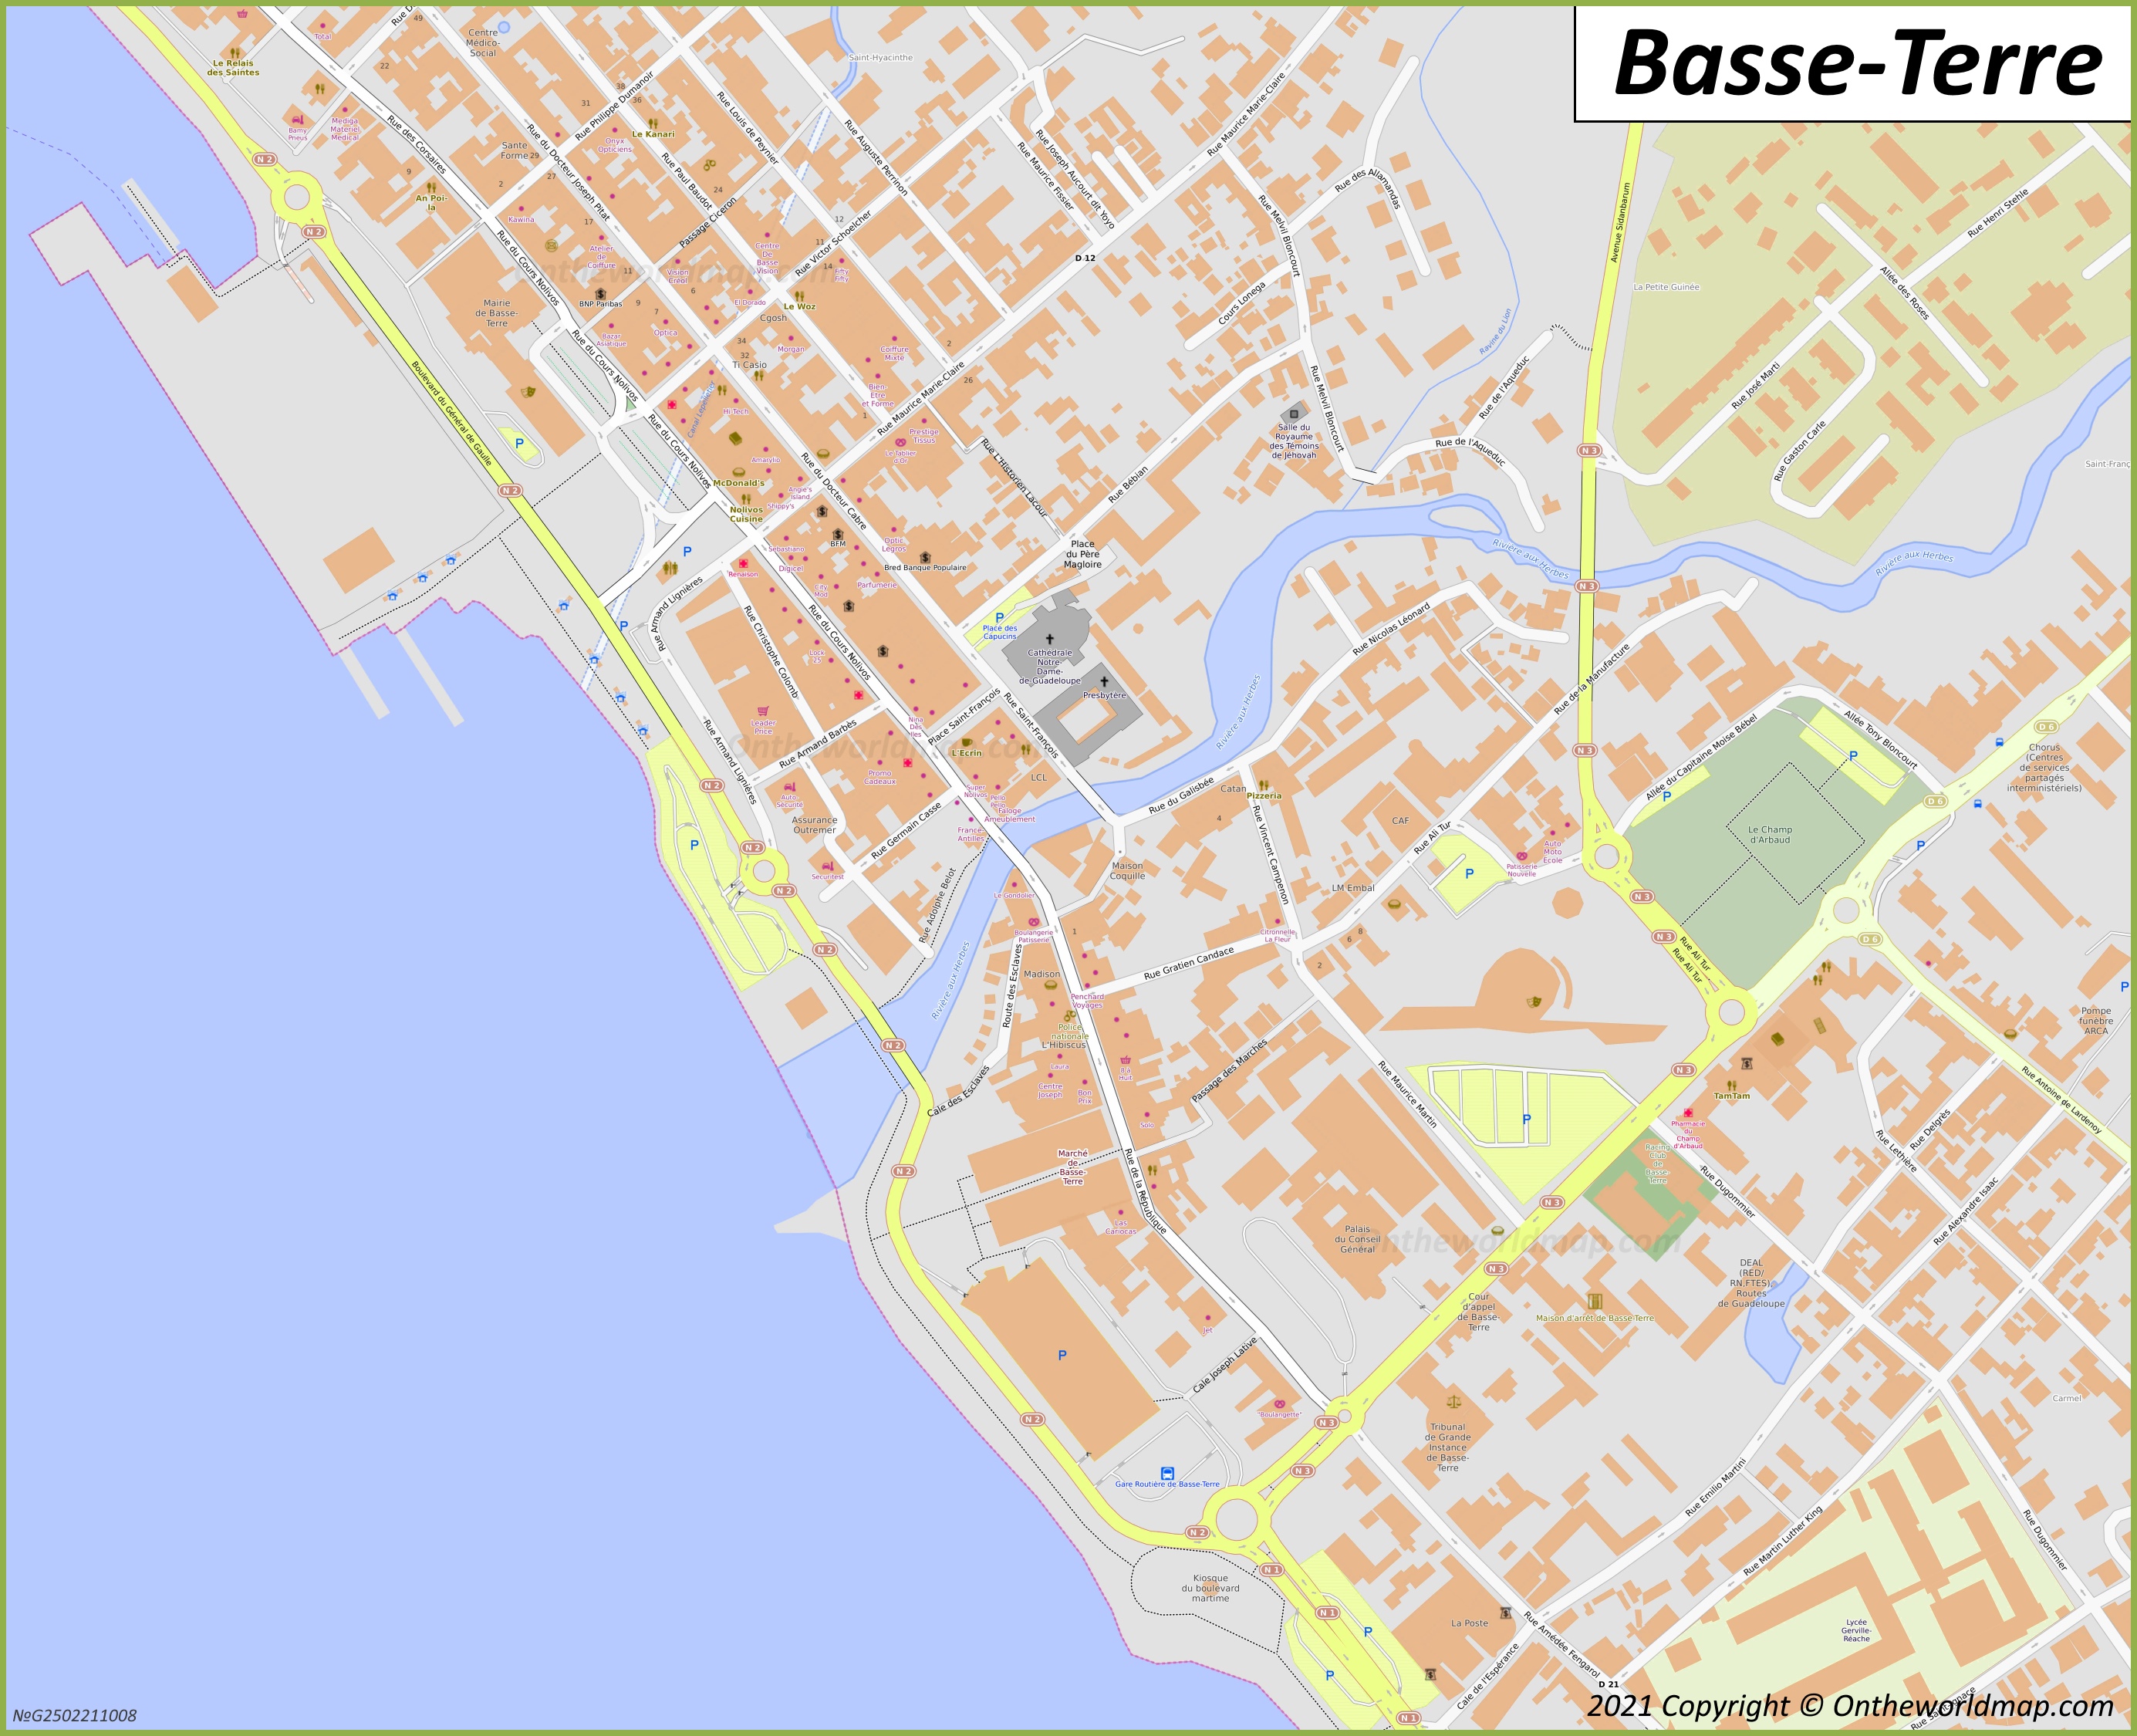 Basse-Terre City Center Map